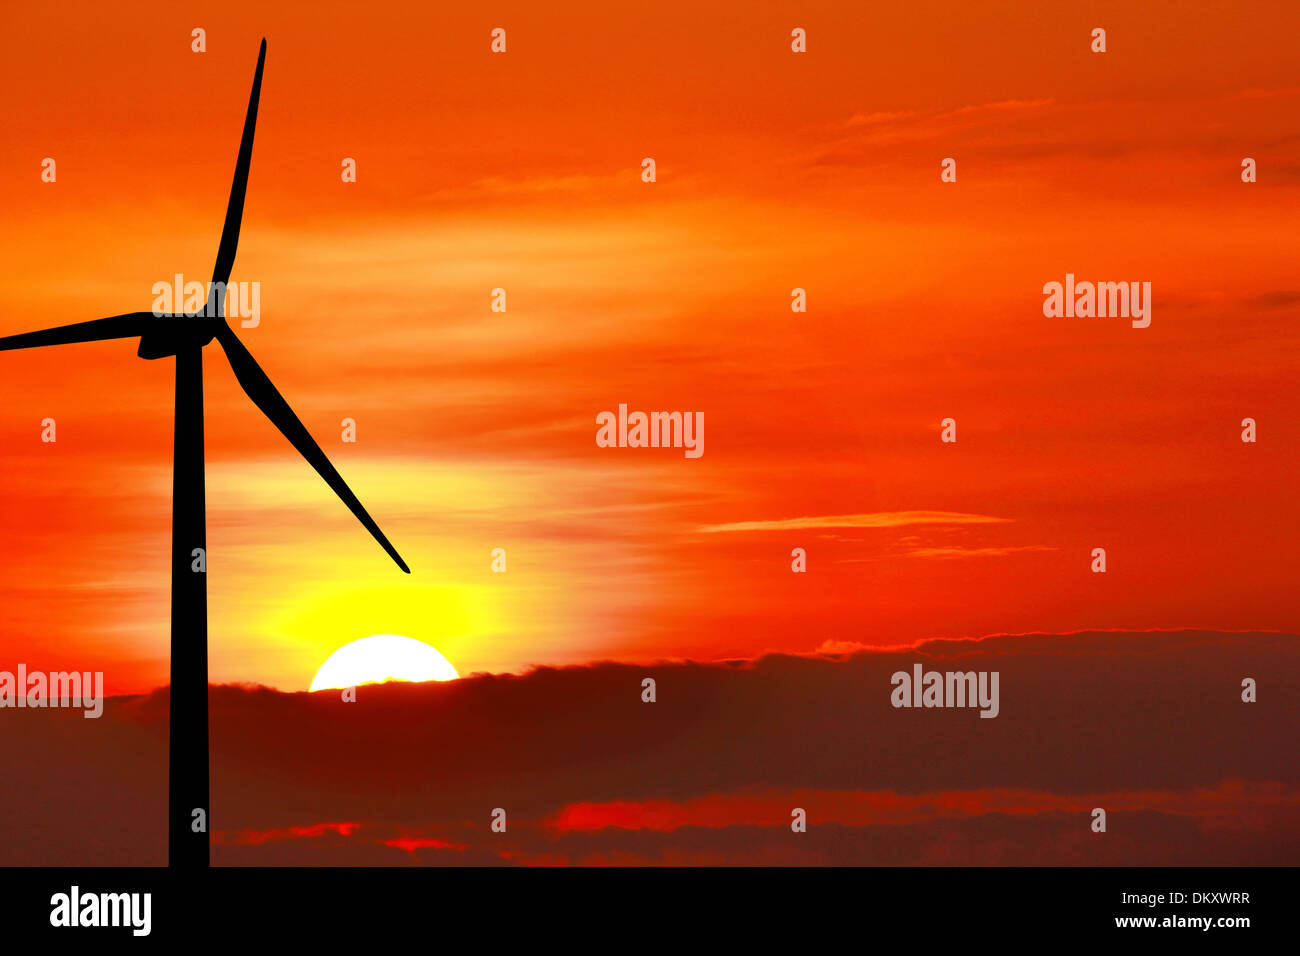 Wind turbine silhouette on sunset background Stock Photo